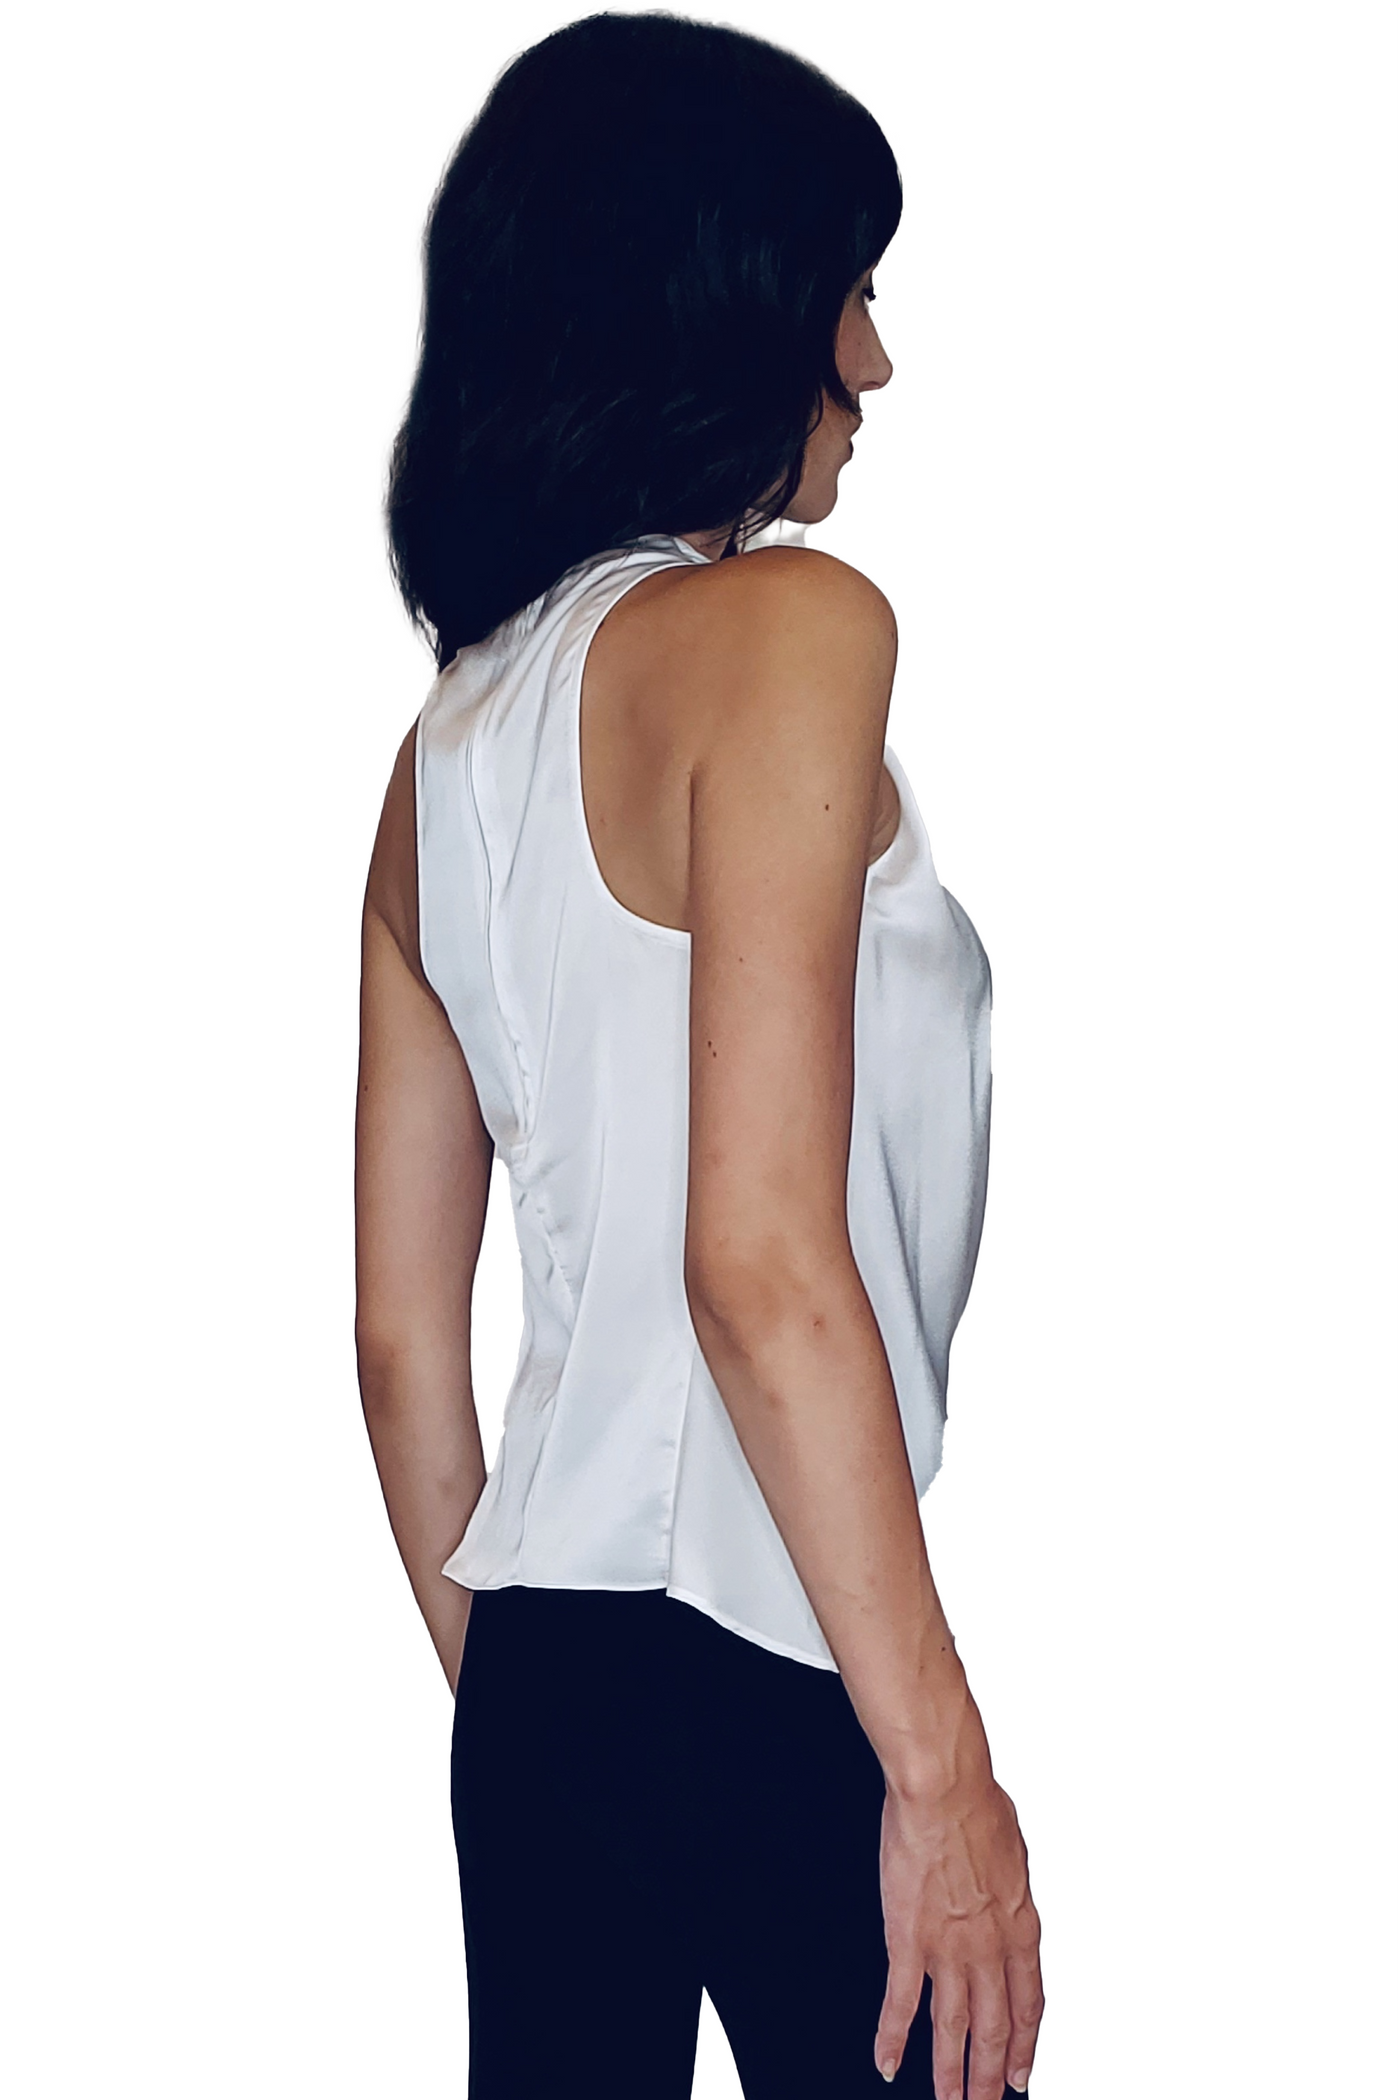 lblc the label: katie sleeveless blouse